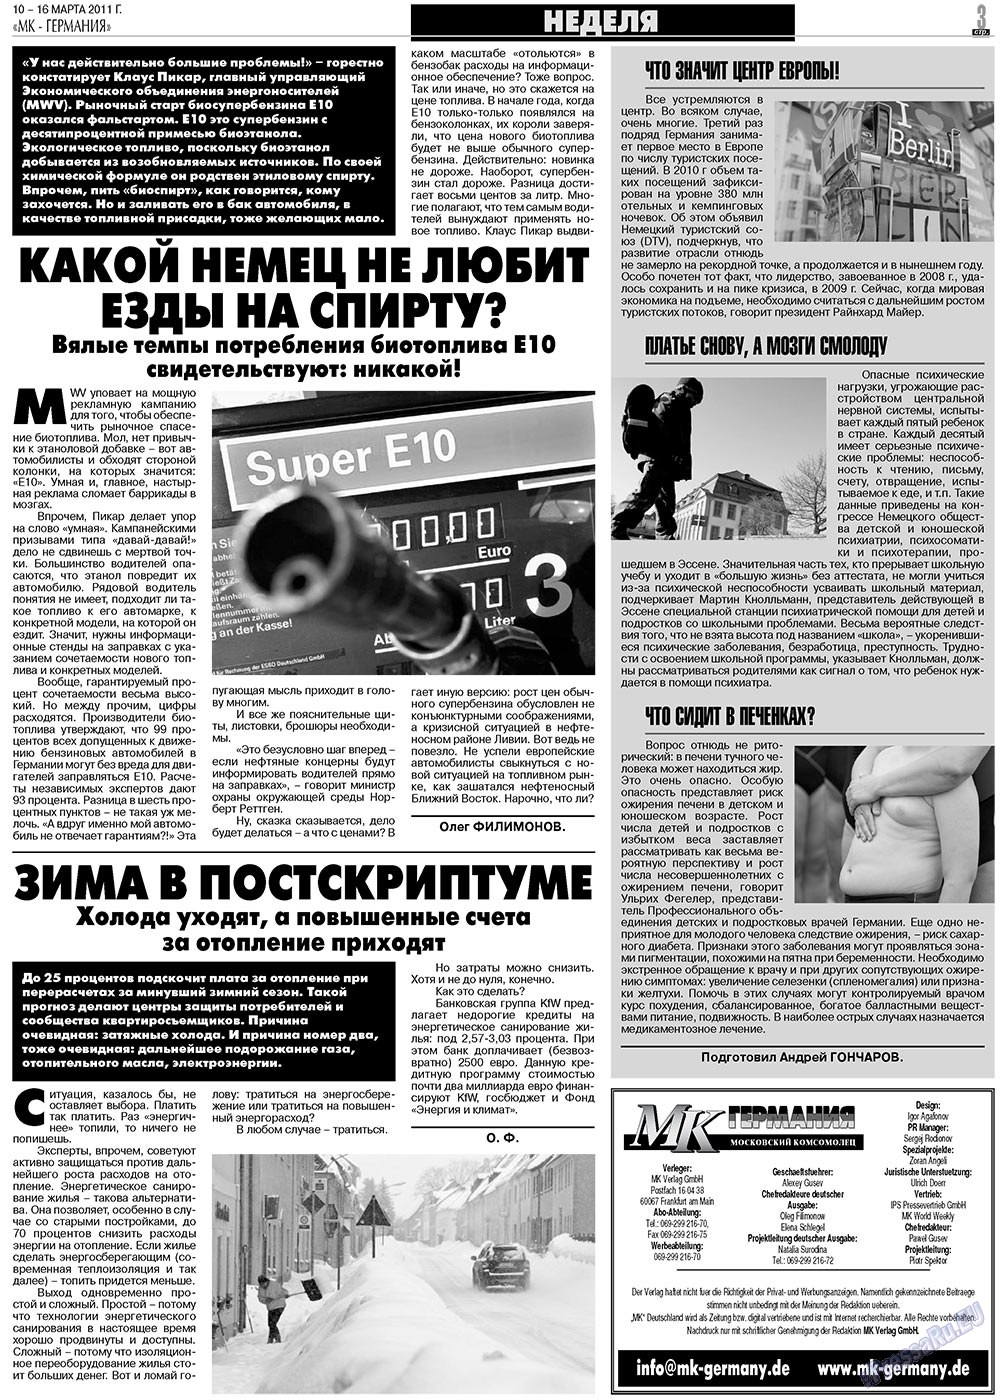 МК-Германия, газета. 2011 №10 стр.3